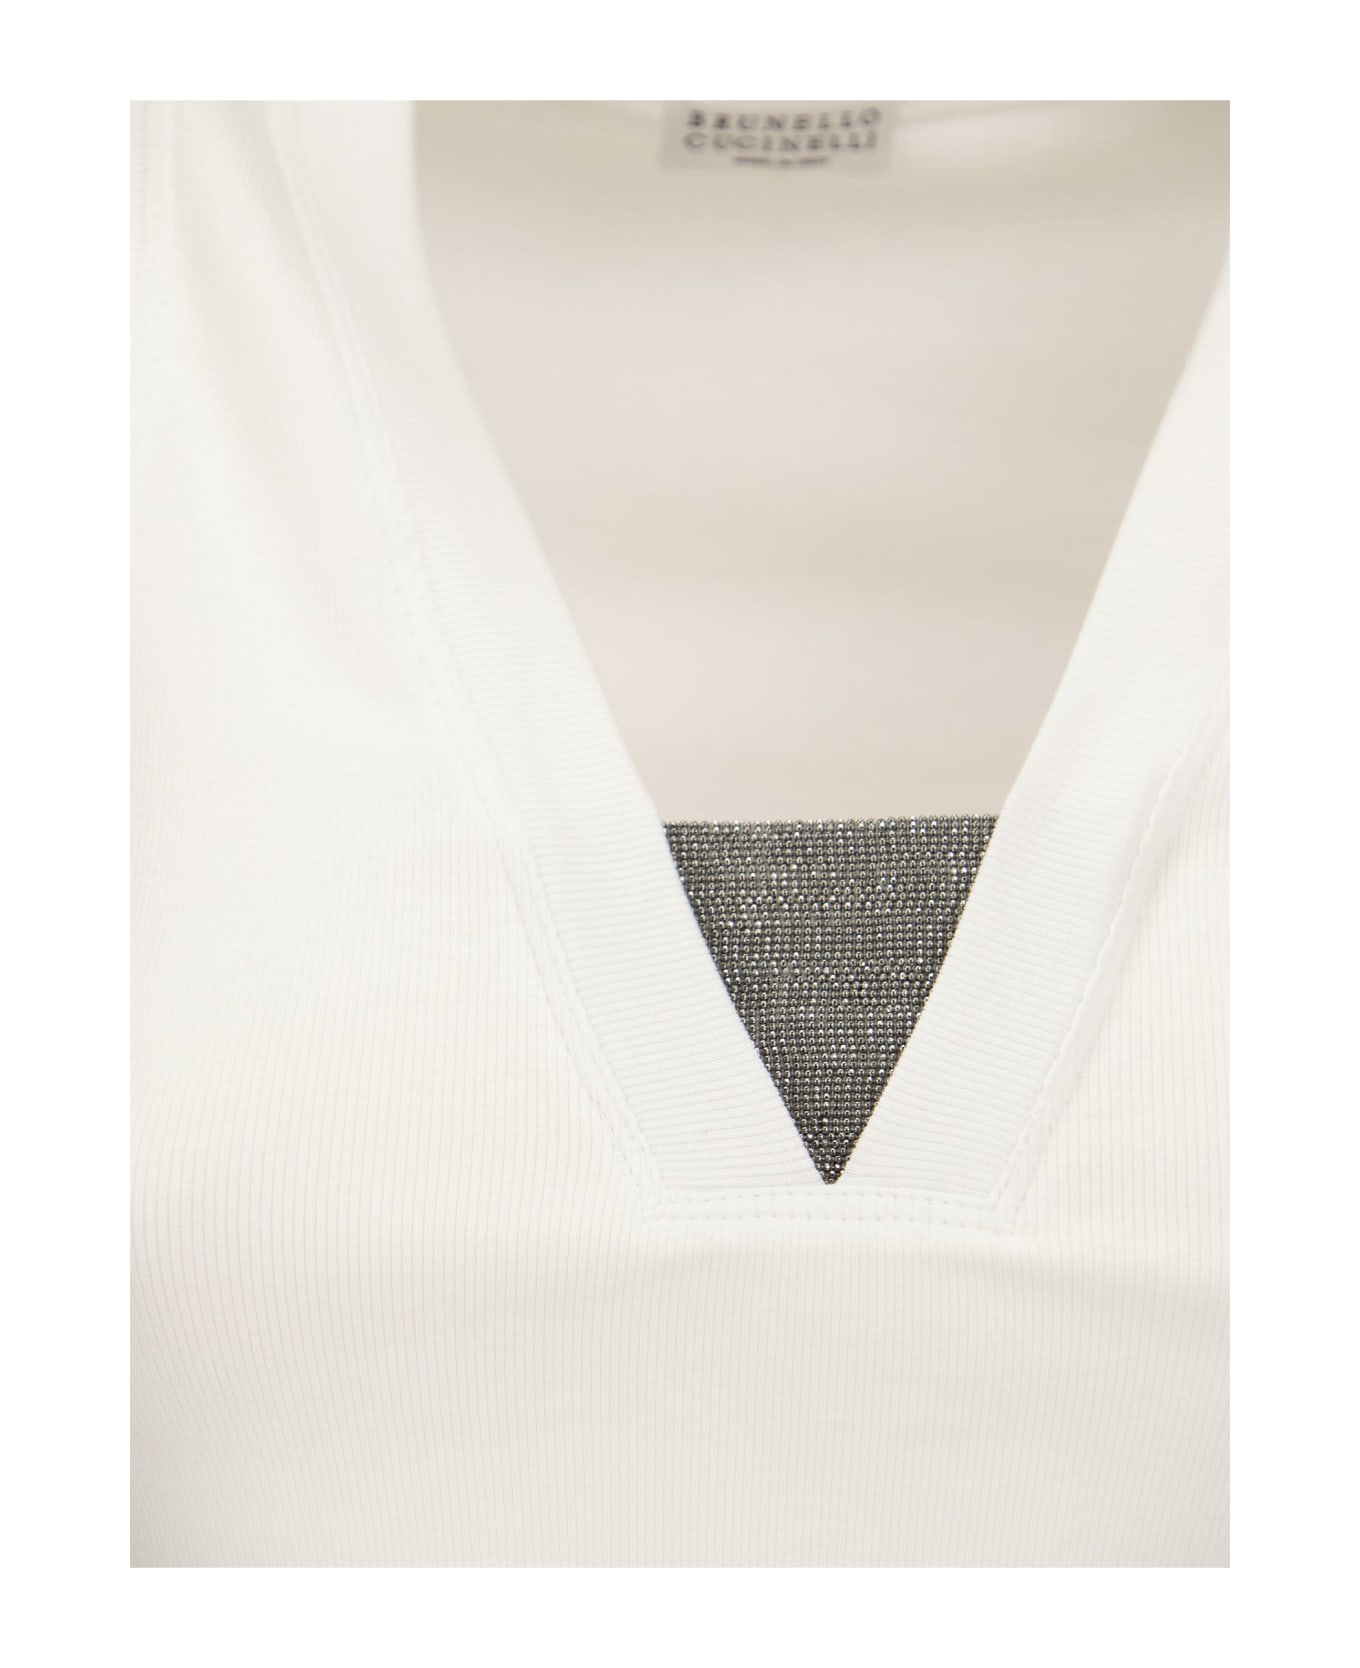 Brunello Cucinelli Stretch Cotton Ribbed Jersey Top With Precious Insert - White